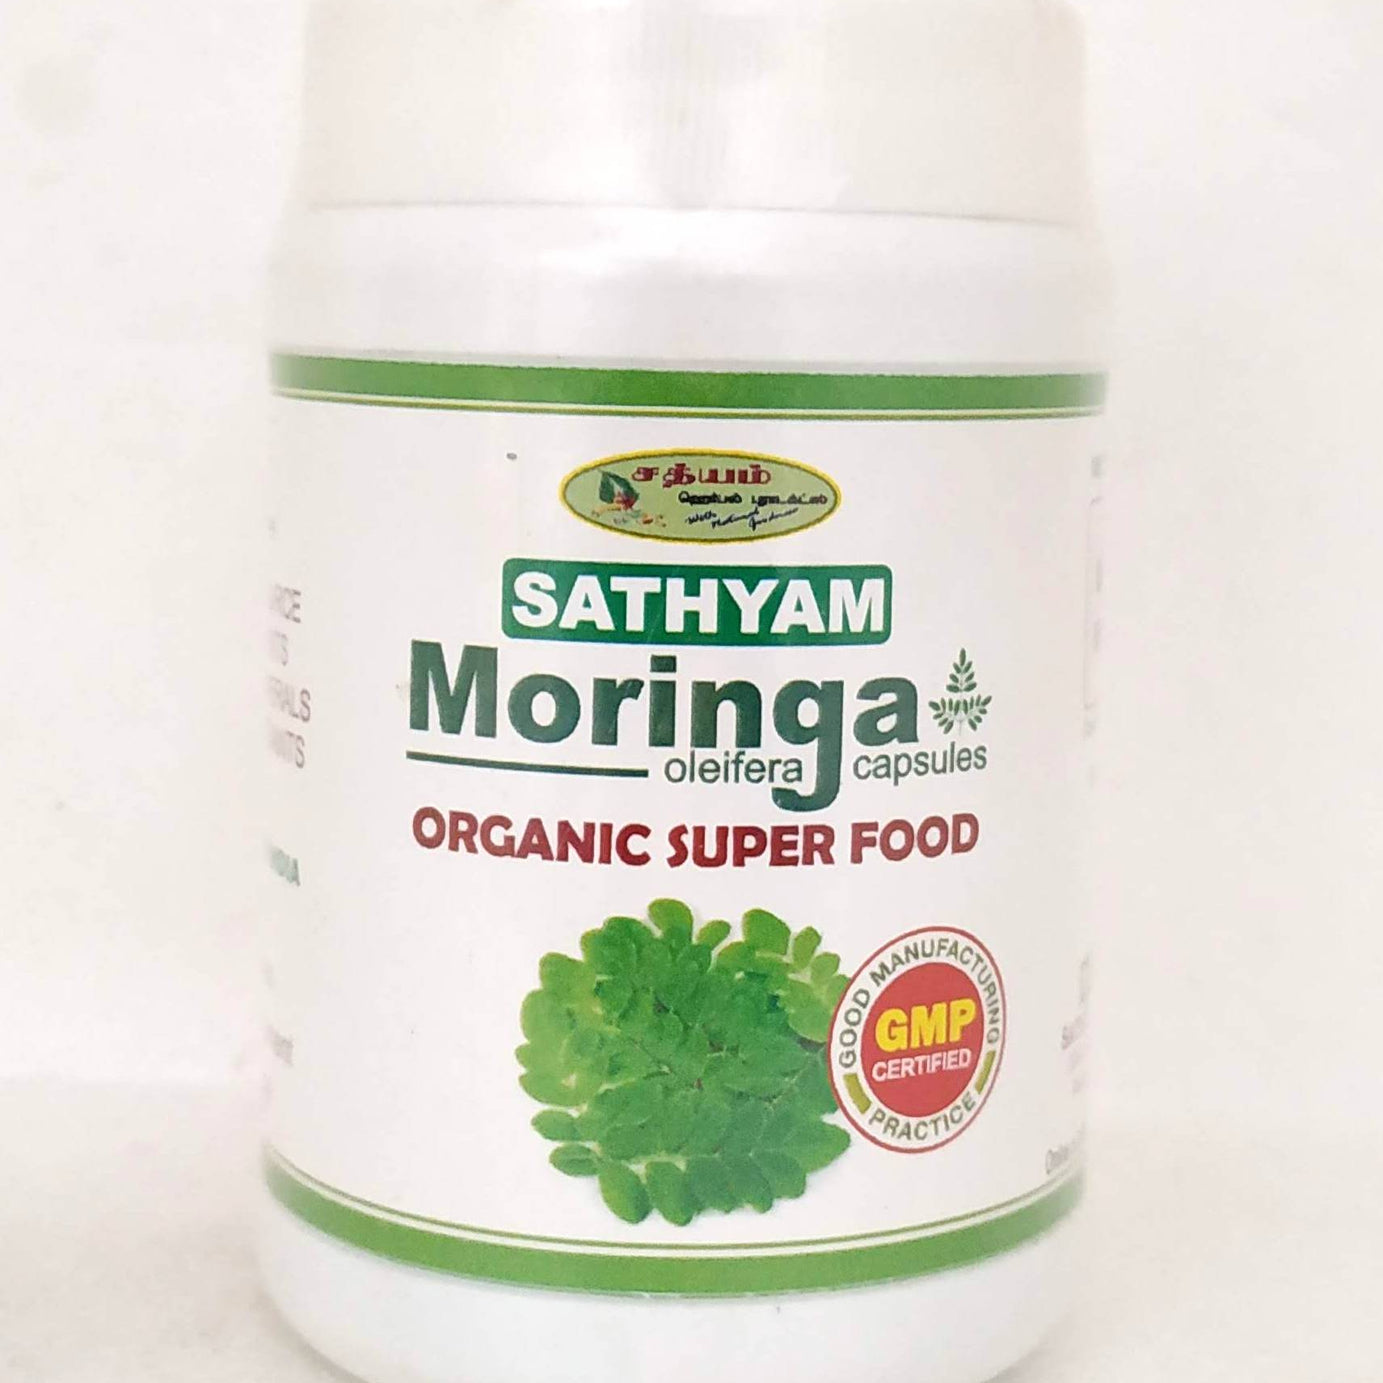 Shop Moringa capsules - 60Capsules at price 120.00 from Sathyam Herbals Online - Ayush Care